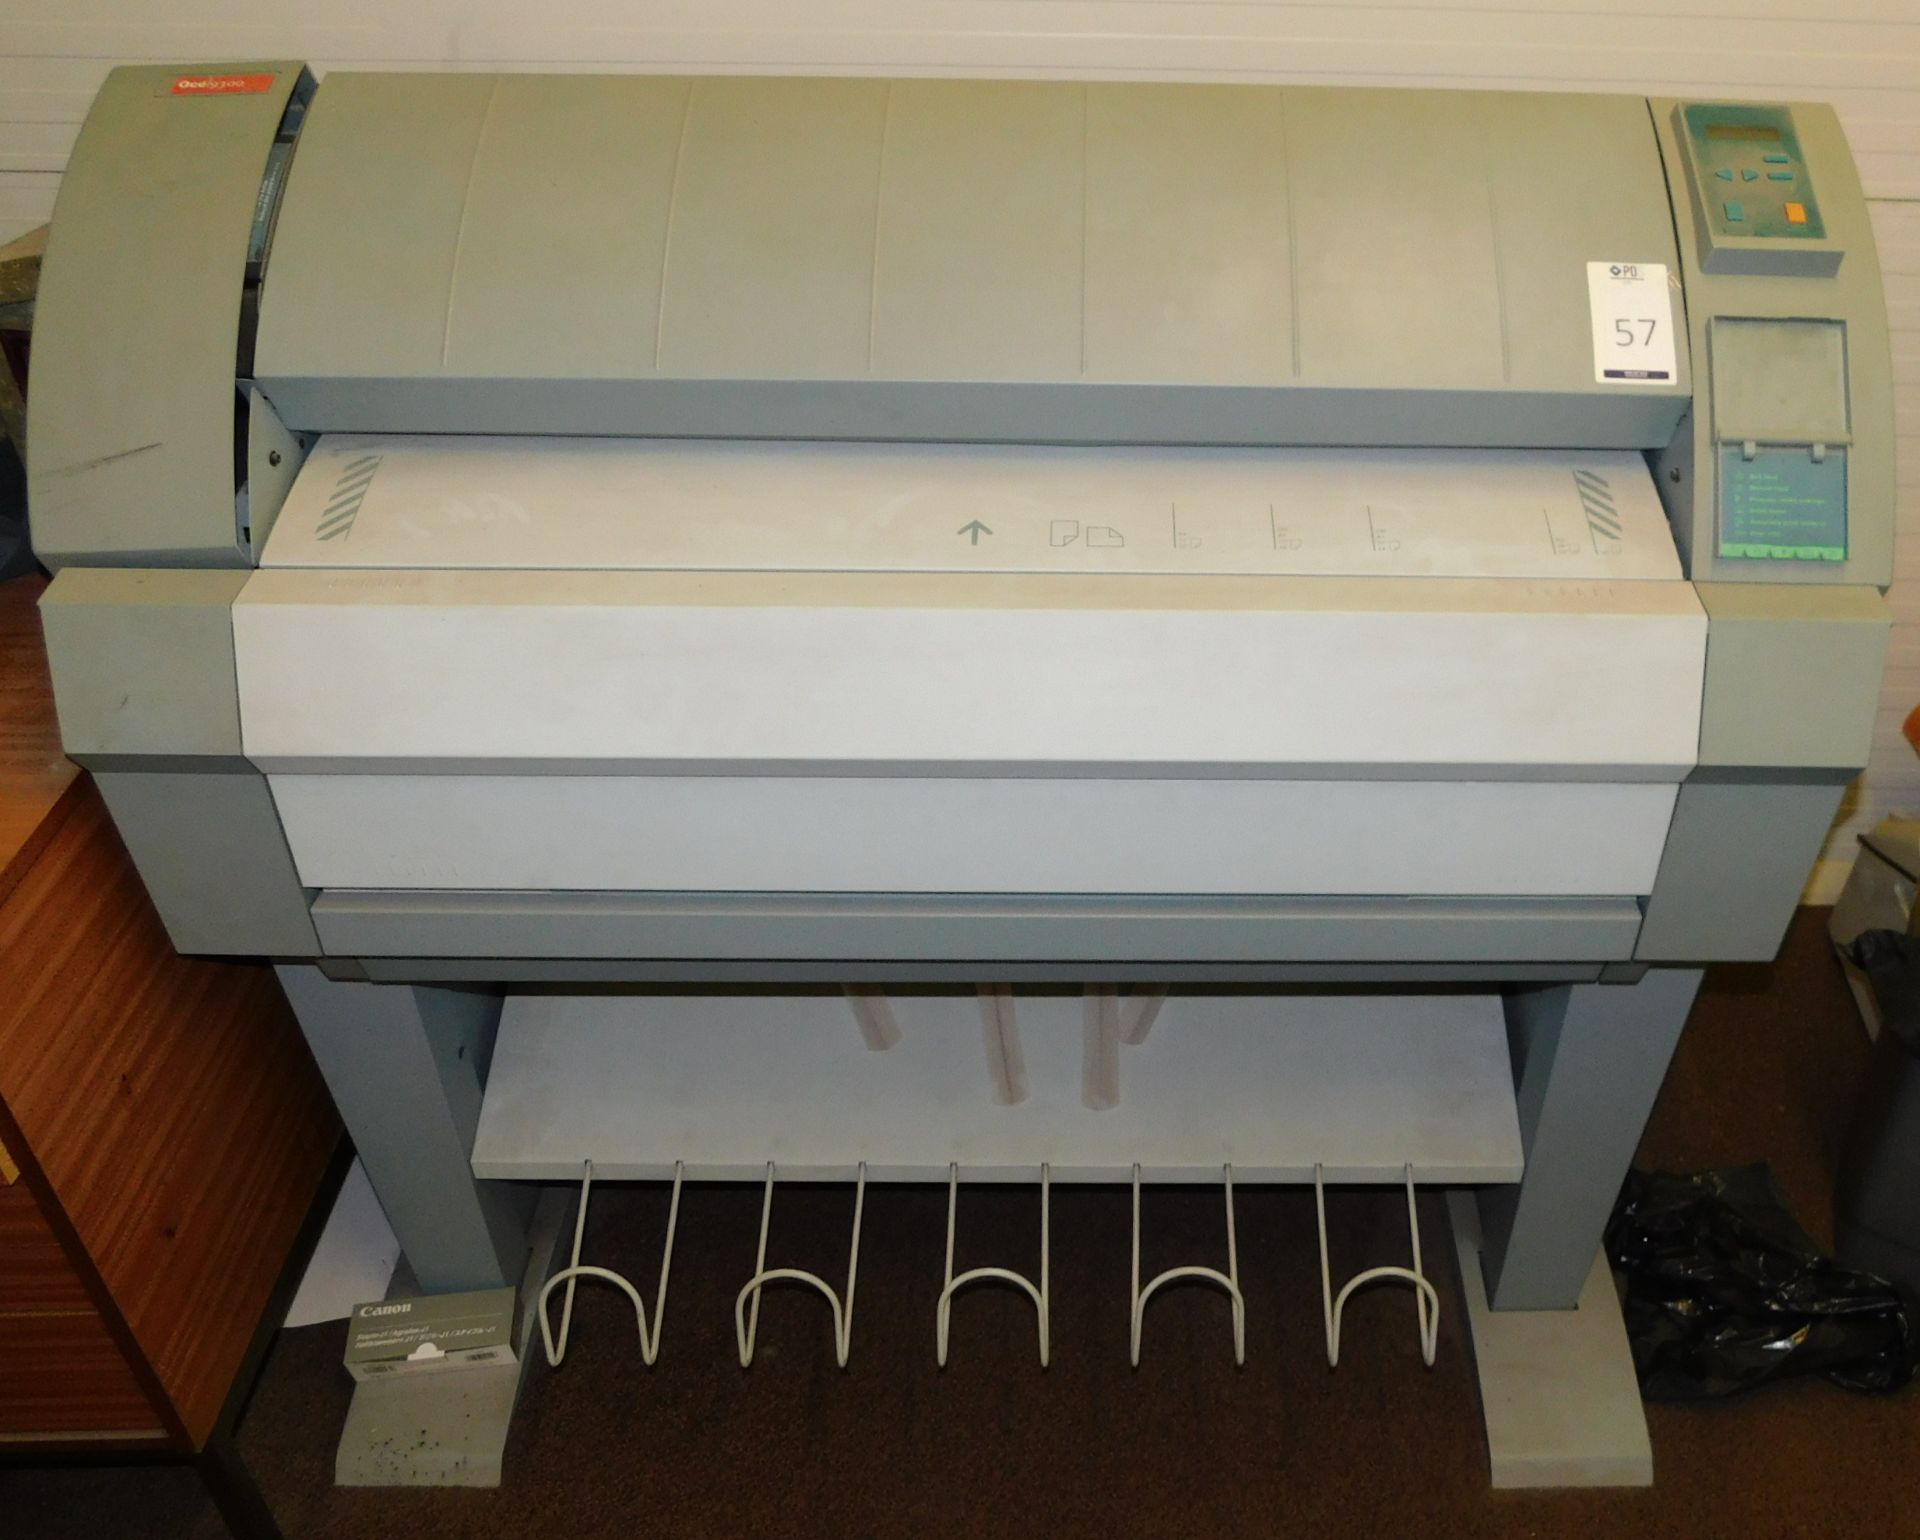 Oce 9300 Wide Format Printer (Located on Mezzanine)